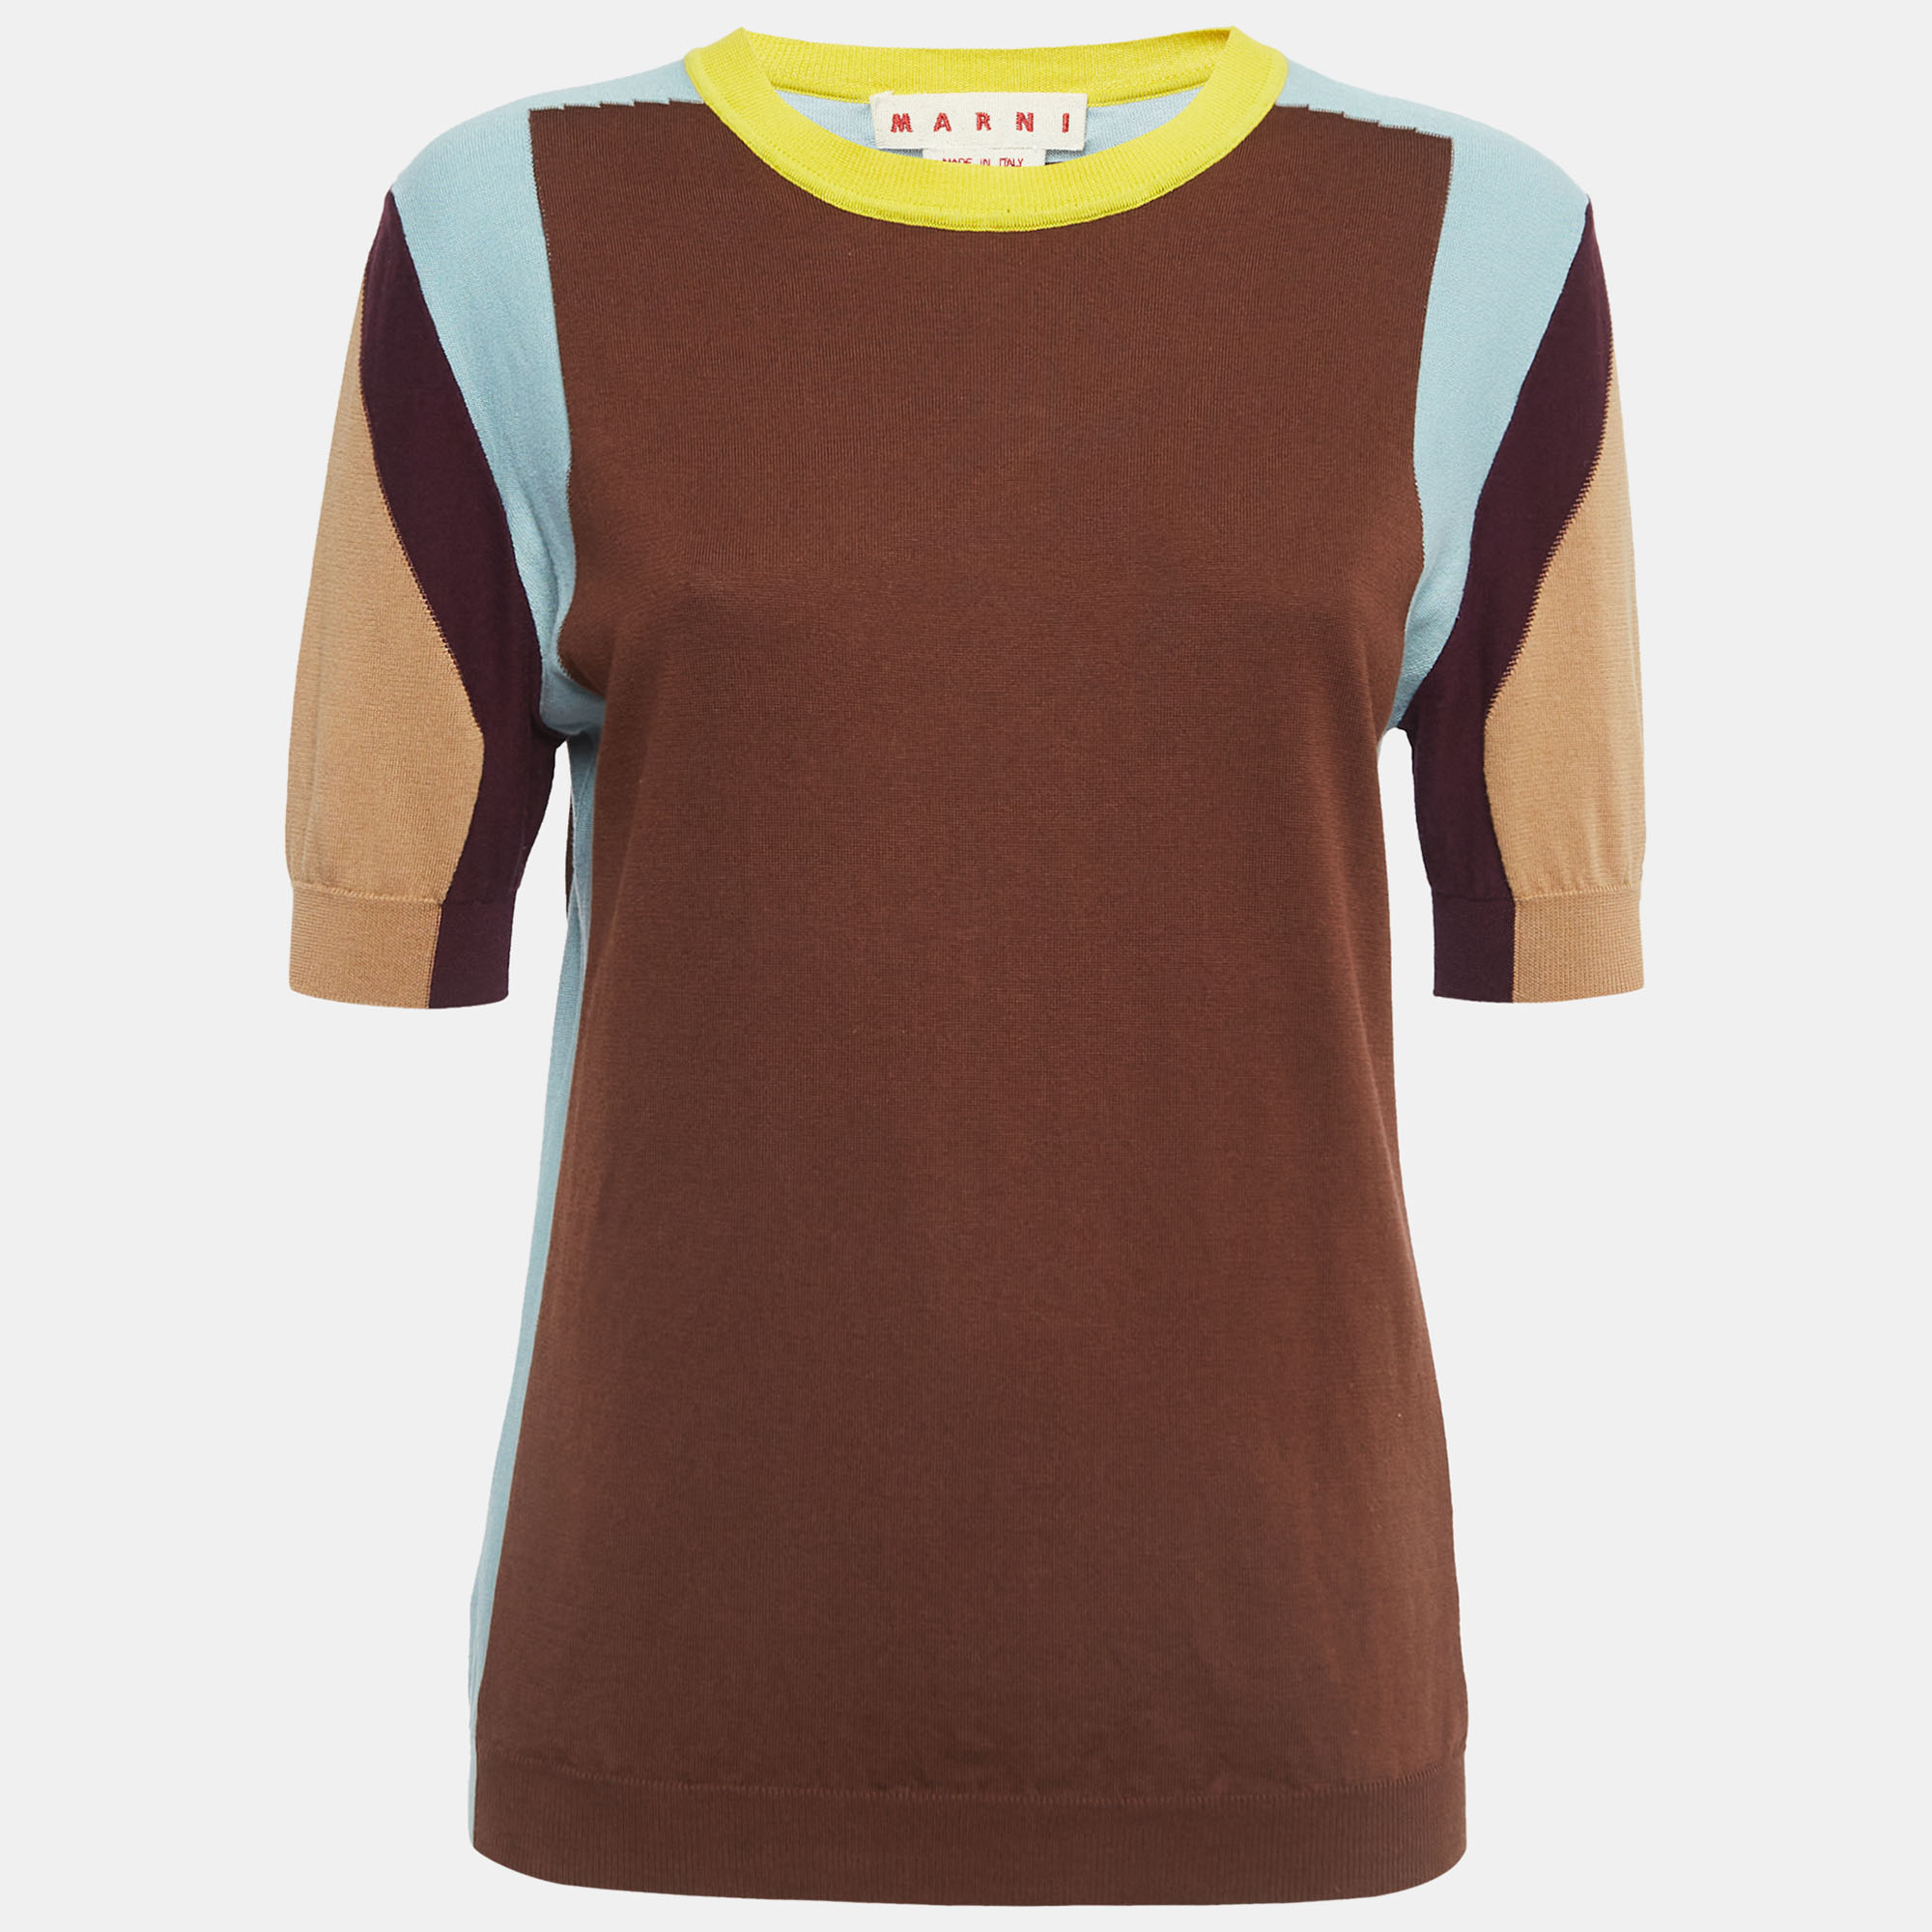 Marni brown cotton knit crew neck t-shirt m